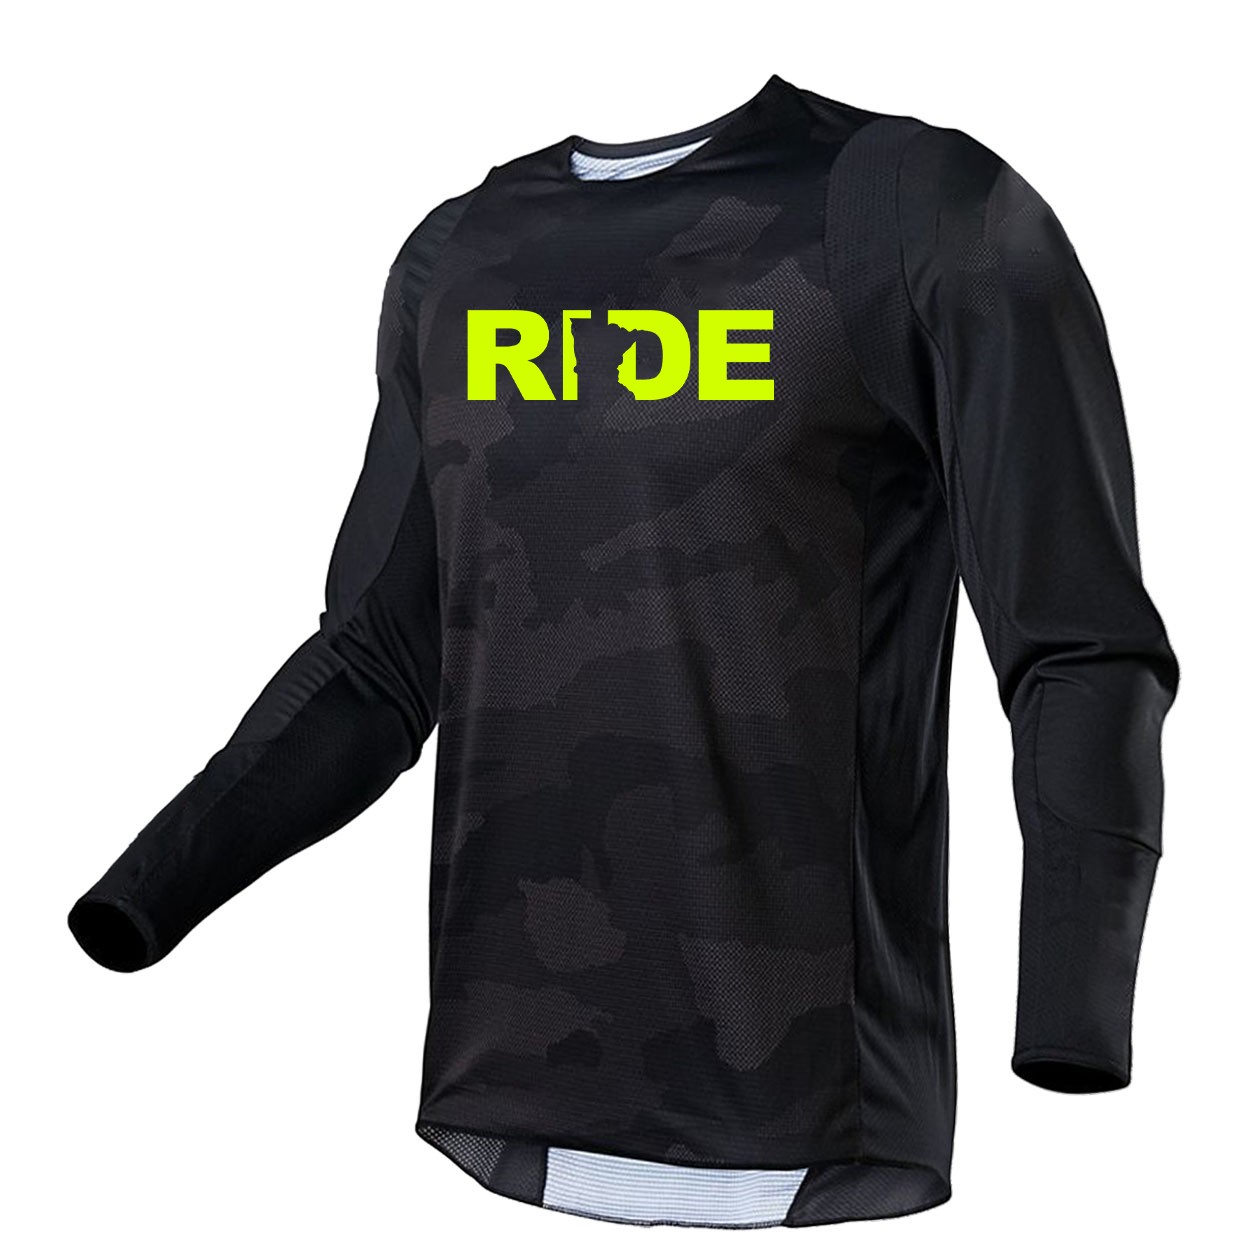 Ride Minnesota Classic Performance Jersey Long Sleeve Shirt Black Camo (Hi-Vis Logo)